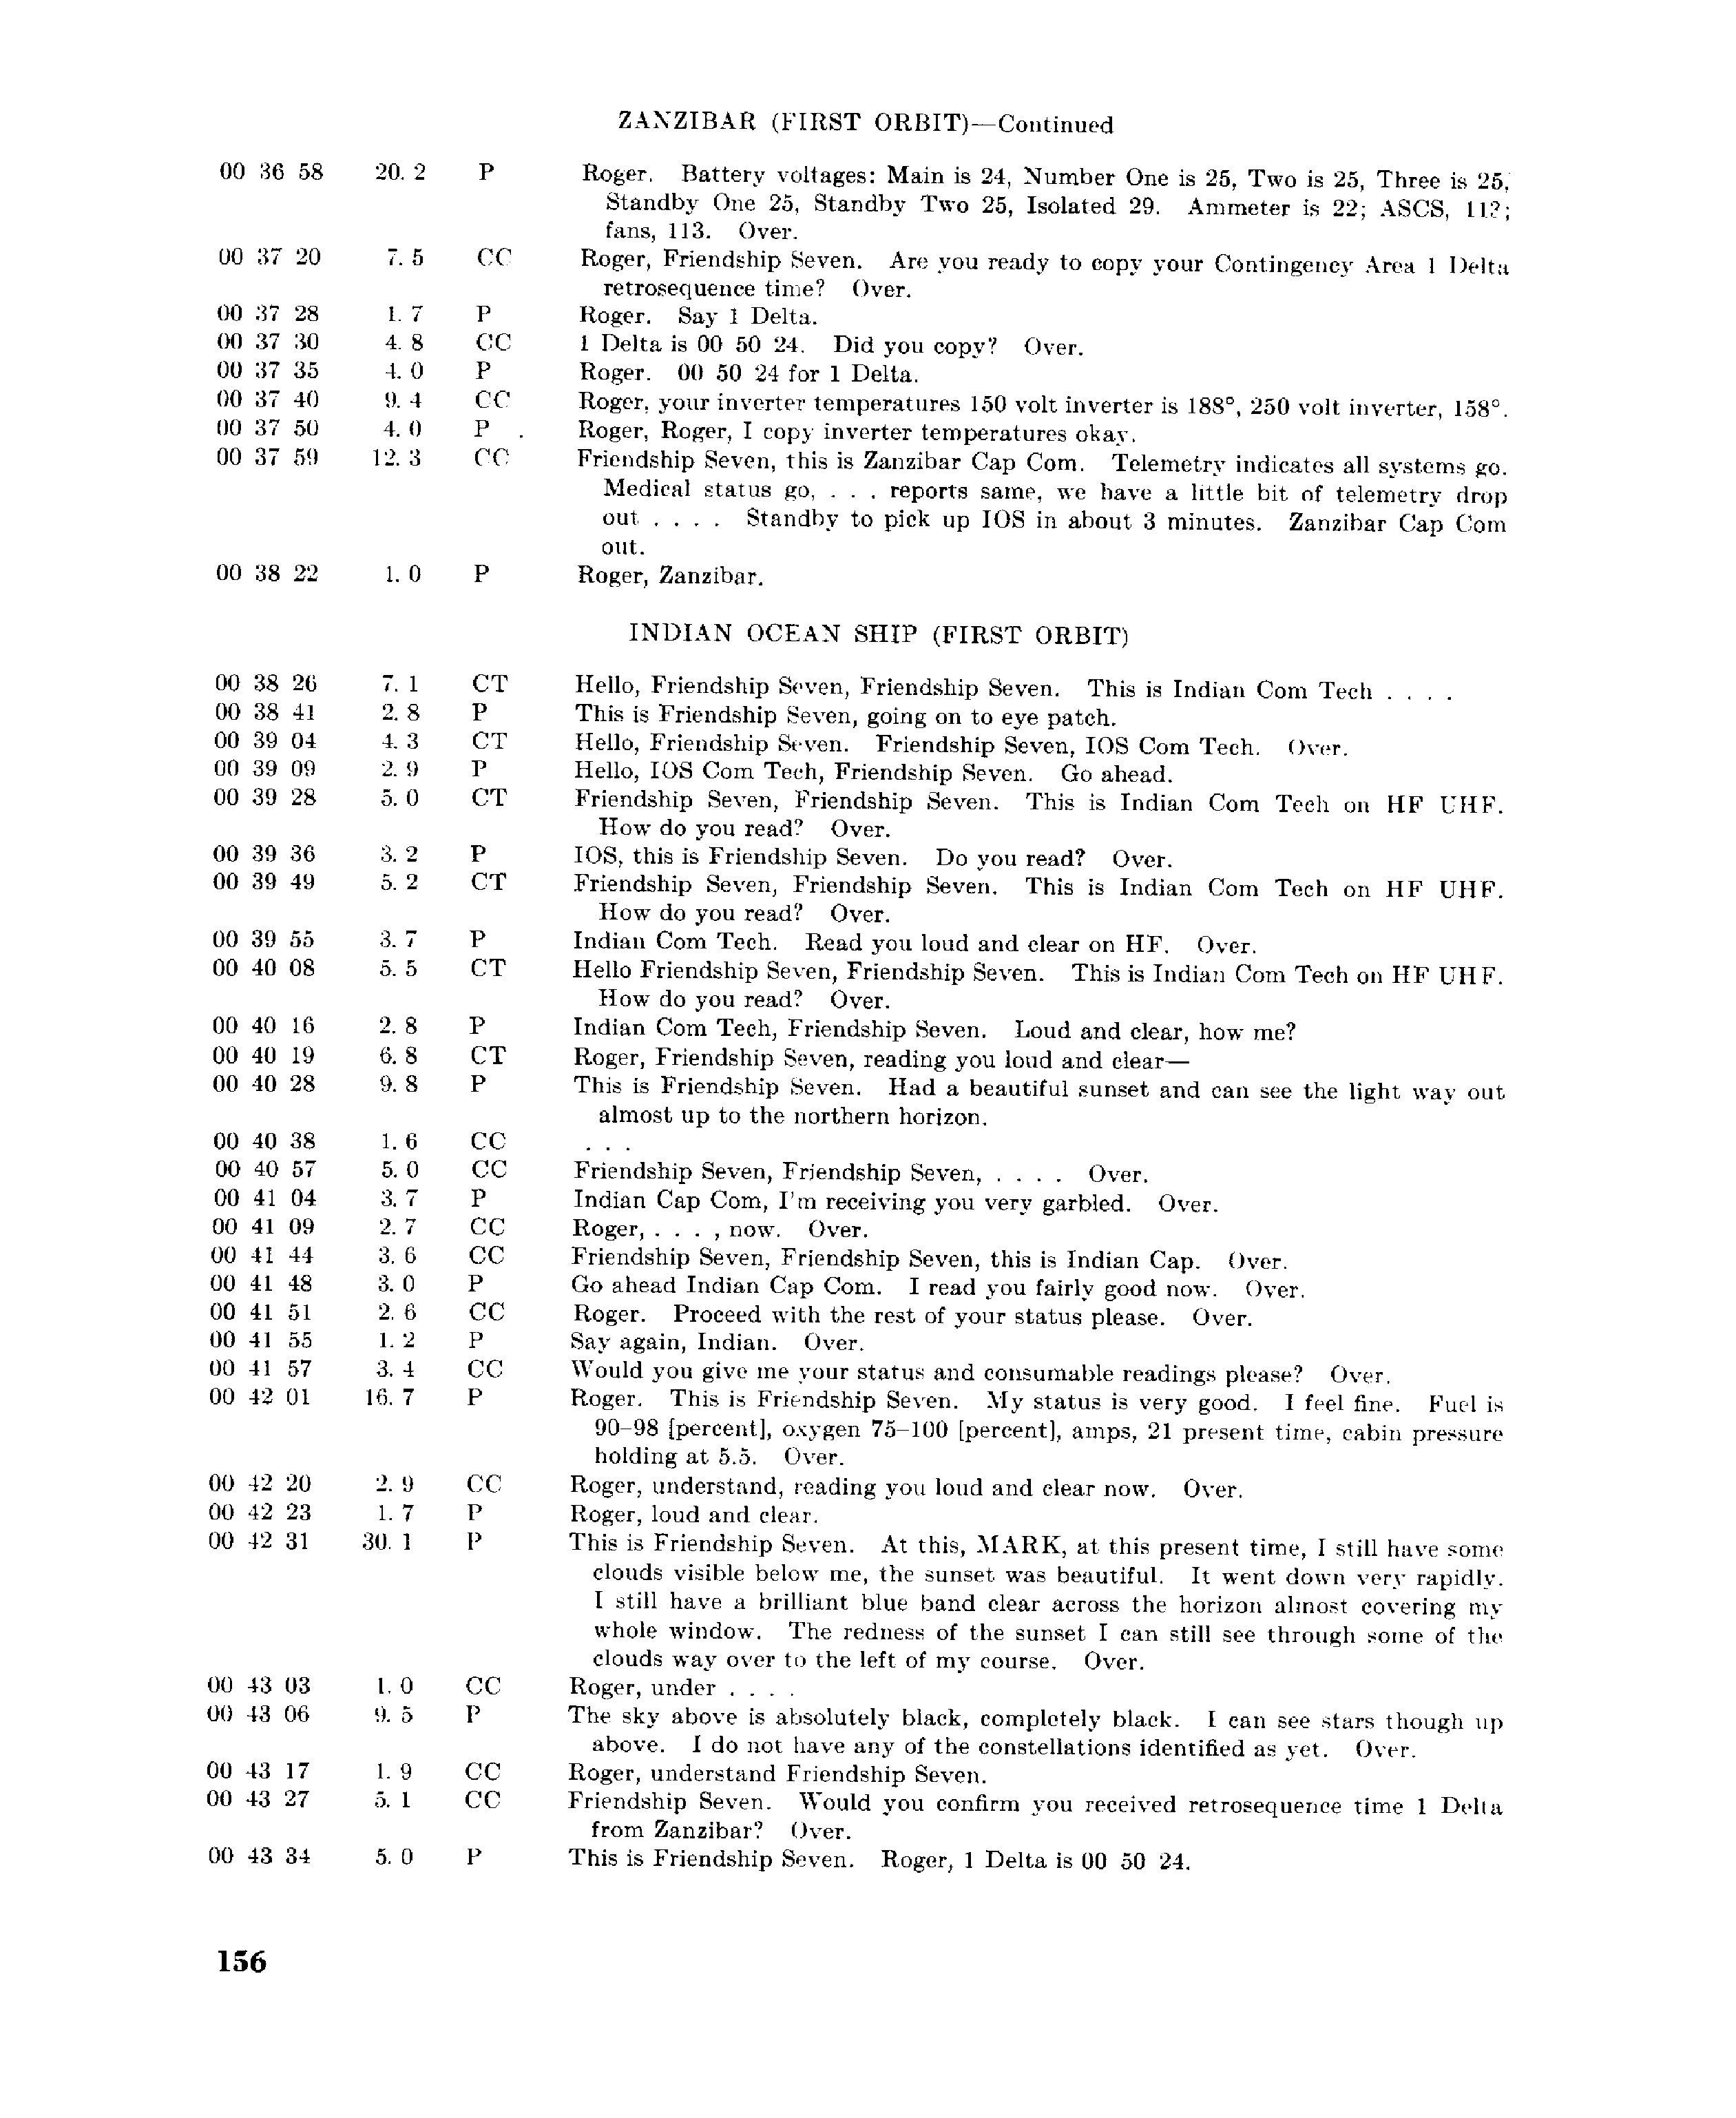 Page 155 of Mercury 6’s original transcript